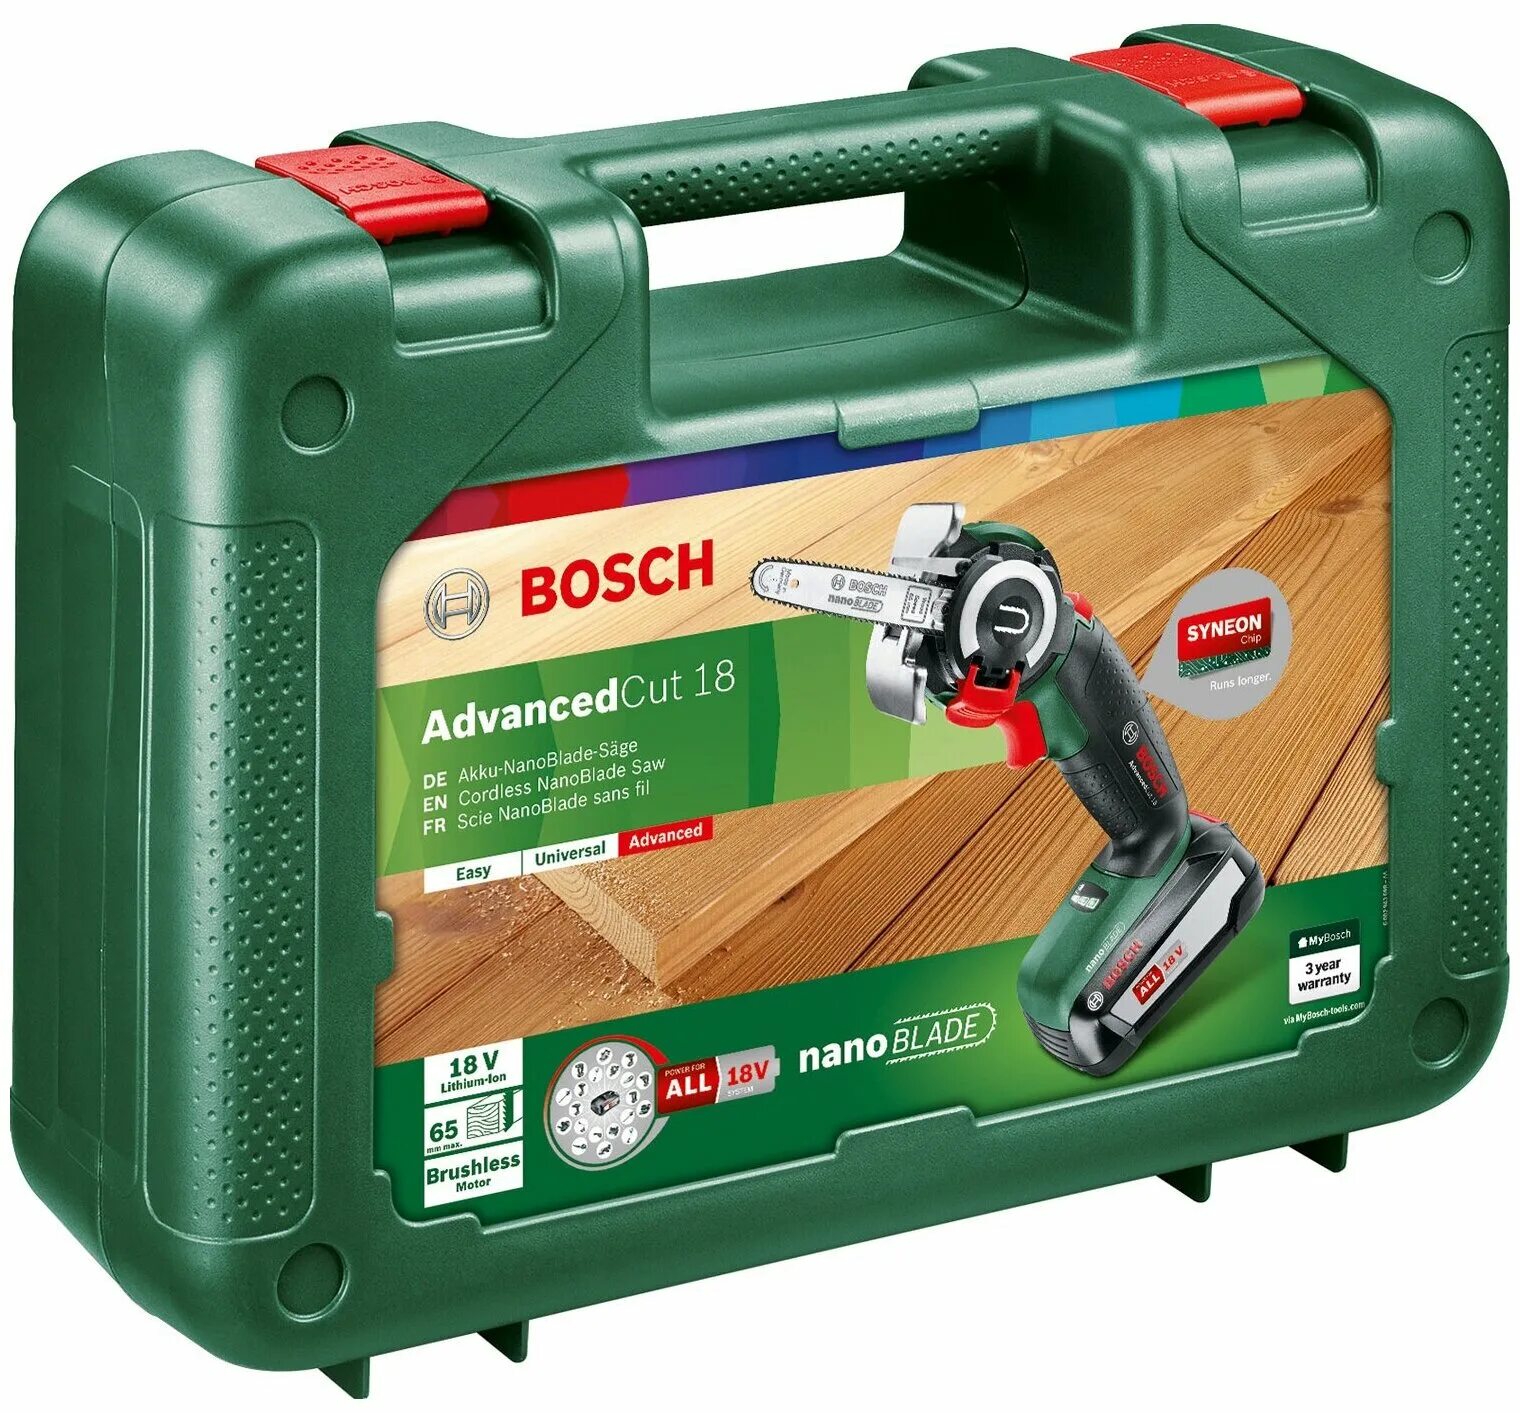 Bosch ADVANCEDCUT 18. Аккумуляторная мини-цепная пила Bosch ADVANCEDCUT 18. Аккумуляторная пила Bosch ADVANCEDCUT 18 (06033d5101). Аккумуляторная мини пила бош 18в.